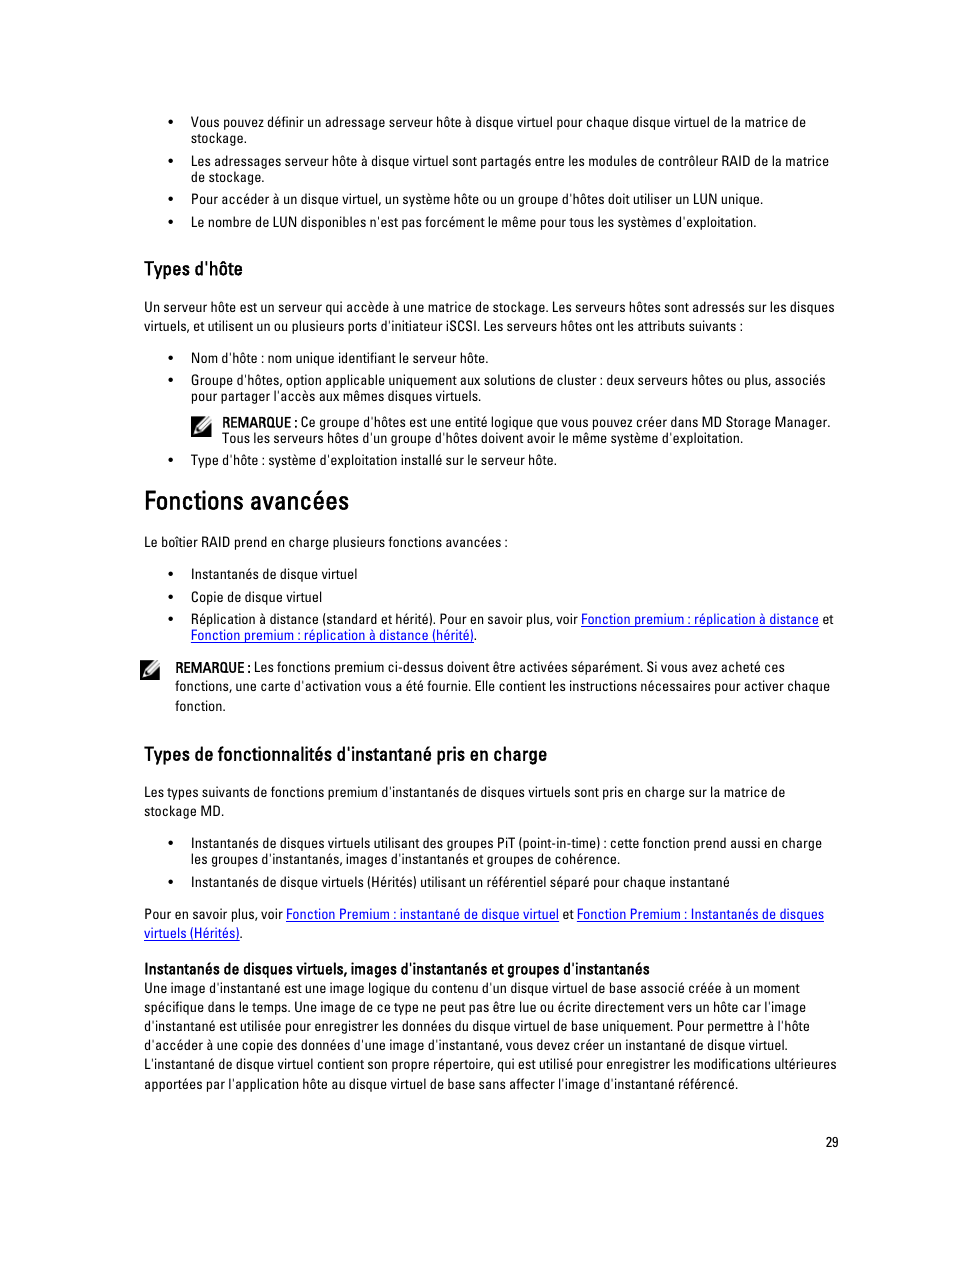 Types d'hôte, Fonctions avancées | Dell PowerVault MD3660i Manuel d'utilisation | Page 29 / 257